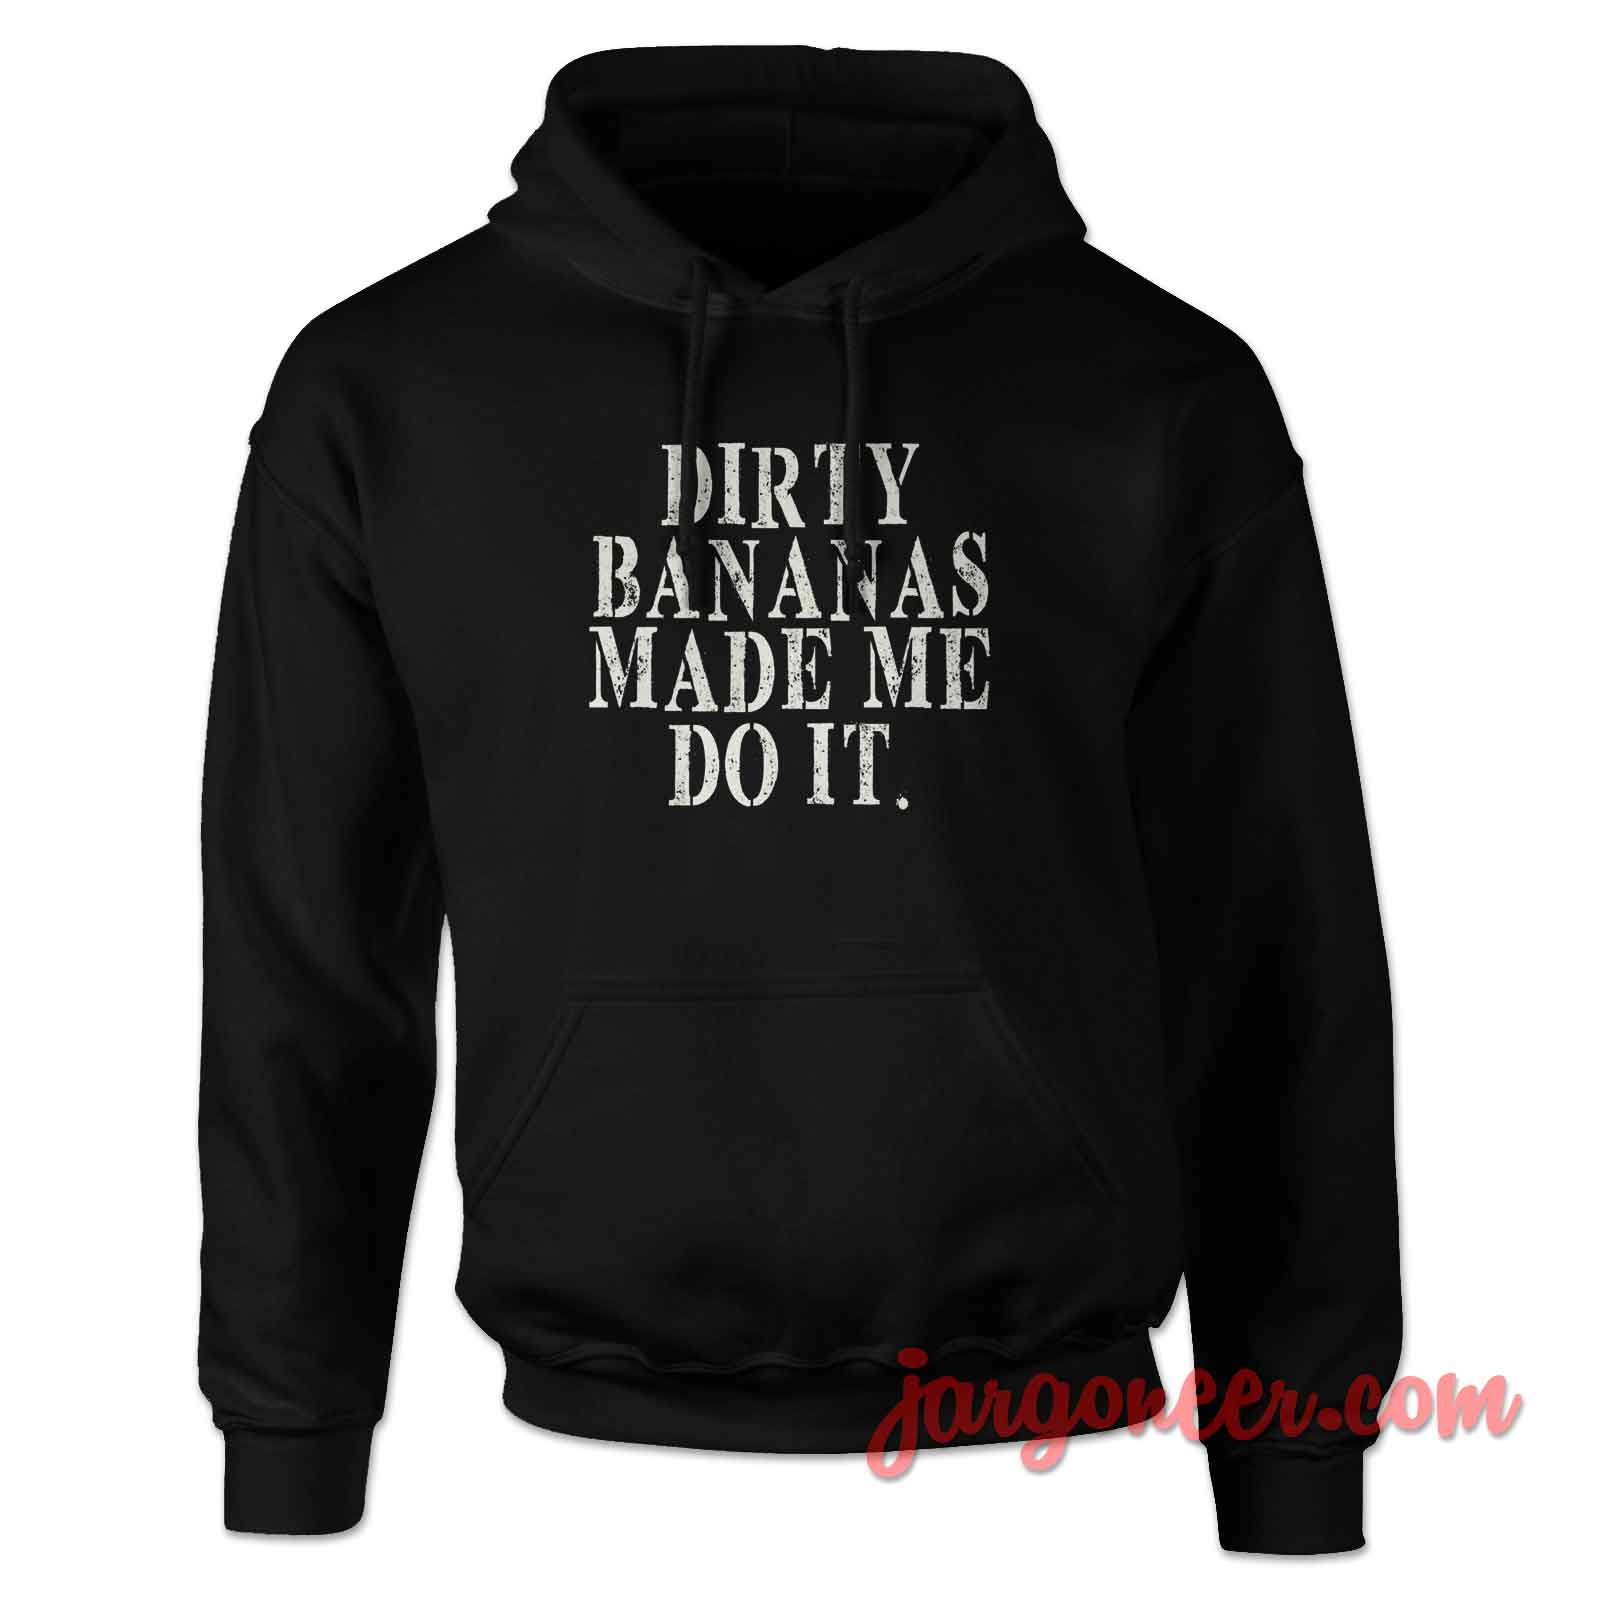 Dirty Bananas - Shop Unique Graphic Cool Shirt Designs